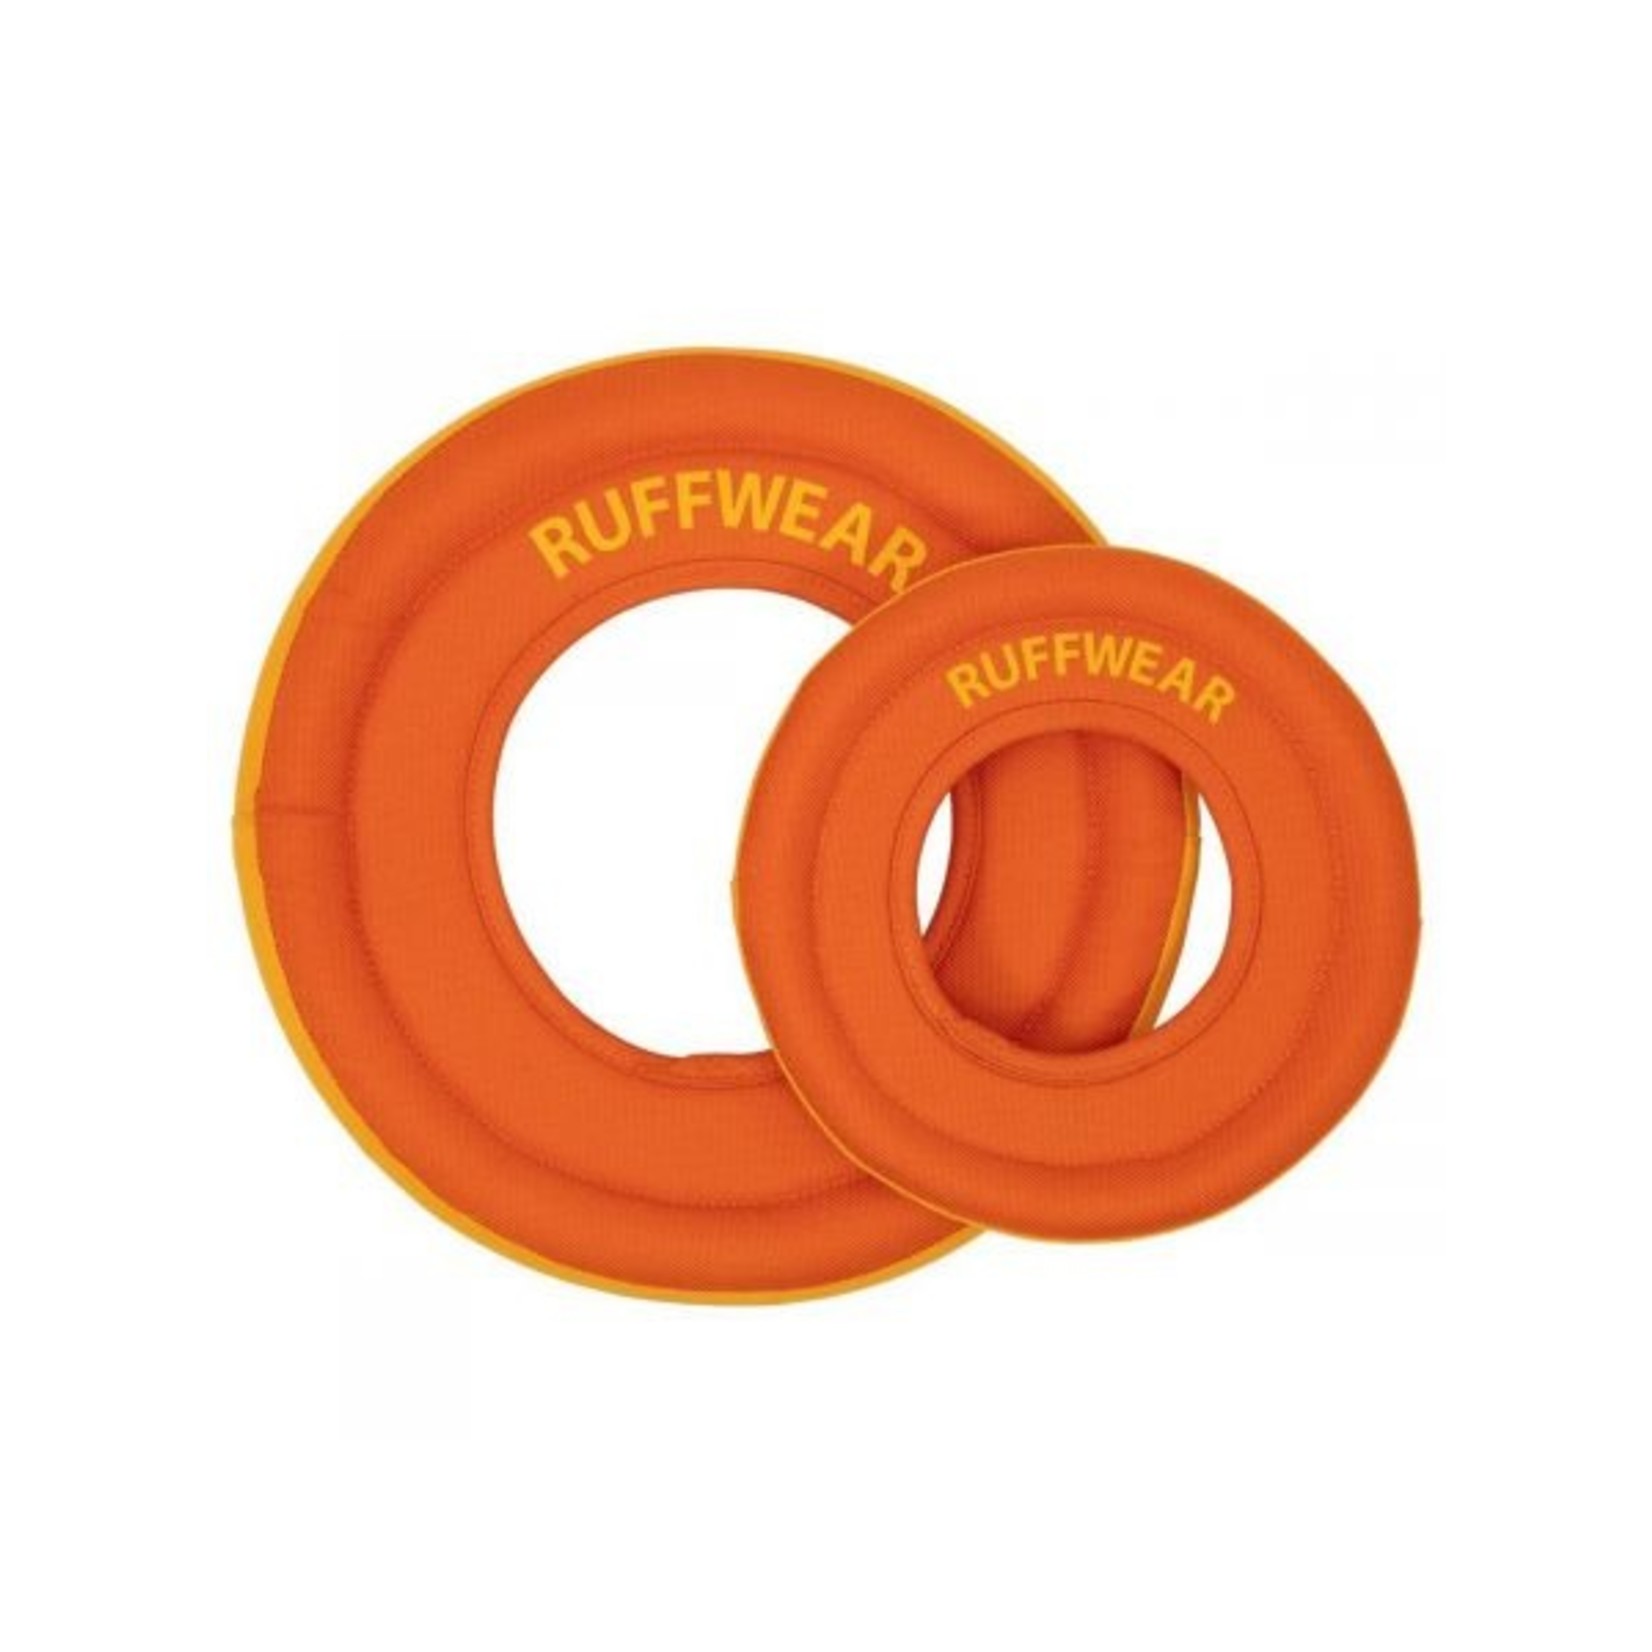 Ruffwear RUFFWEAR Hydro Plane Campfire Orange Dog Toy